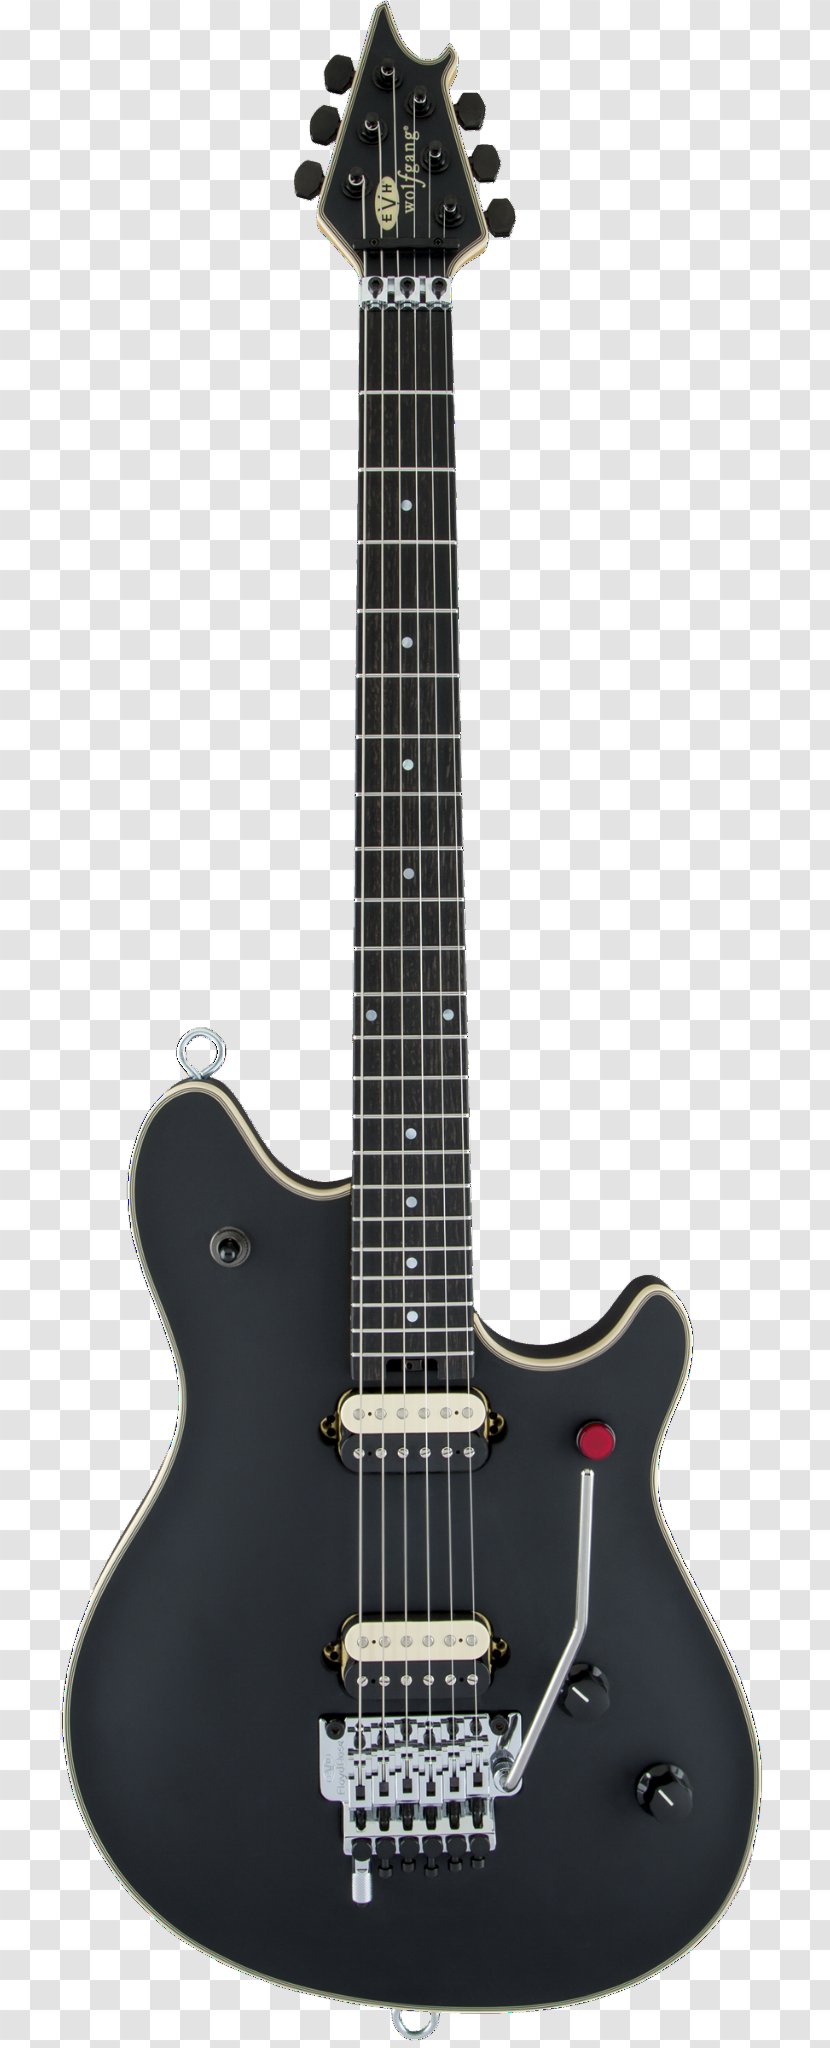 Gibson Les Paul Studio Electric Guitar Brands, Inc. - Electronic Musical Instrument Transparent PNG